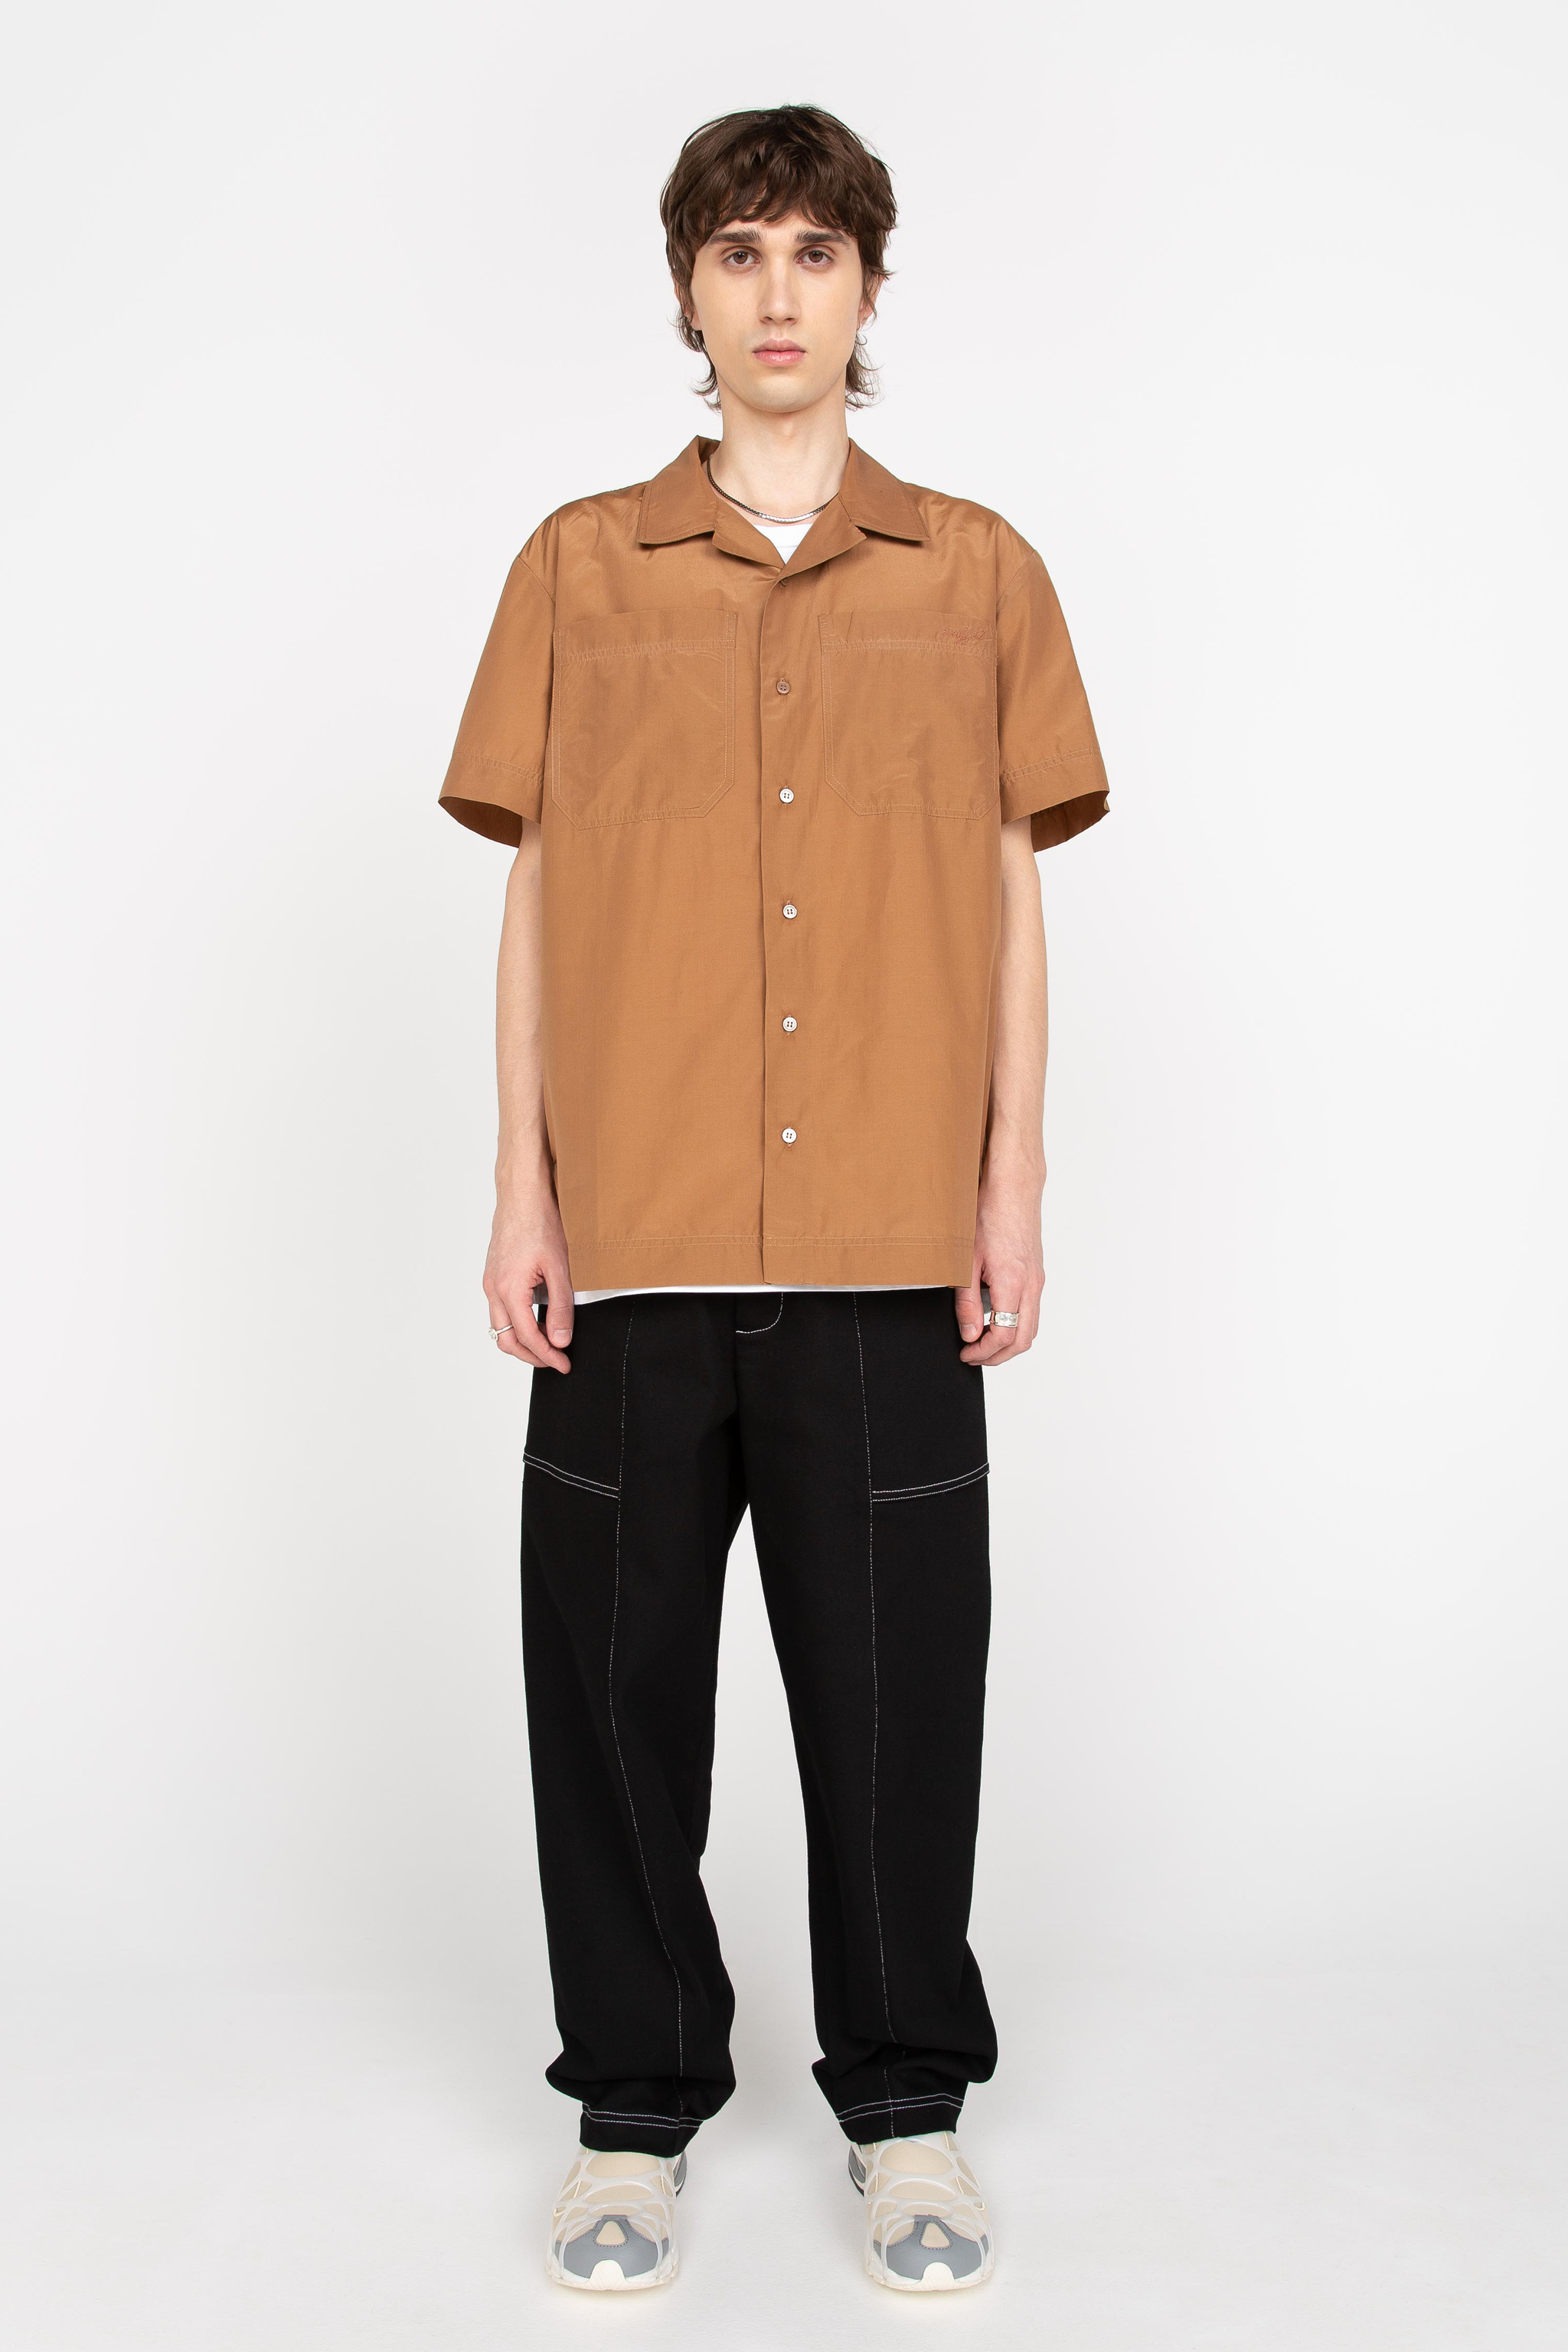 Brown unisex shirt